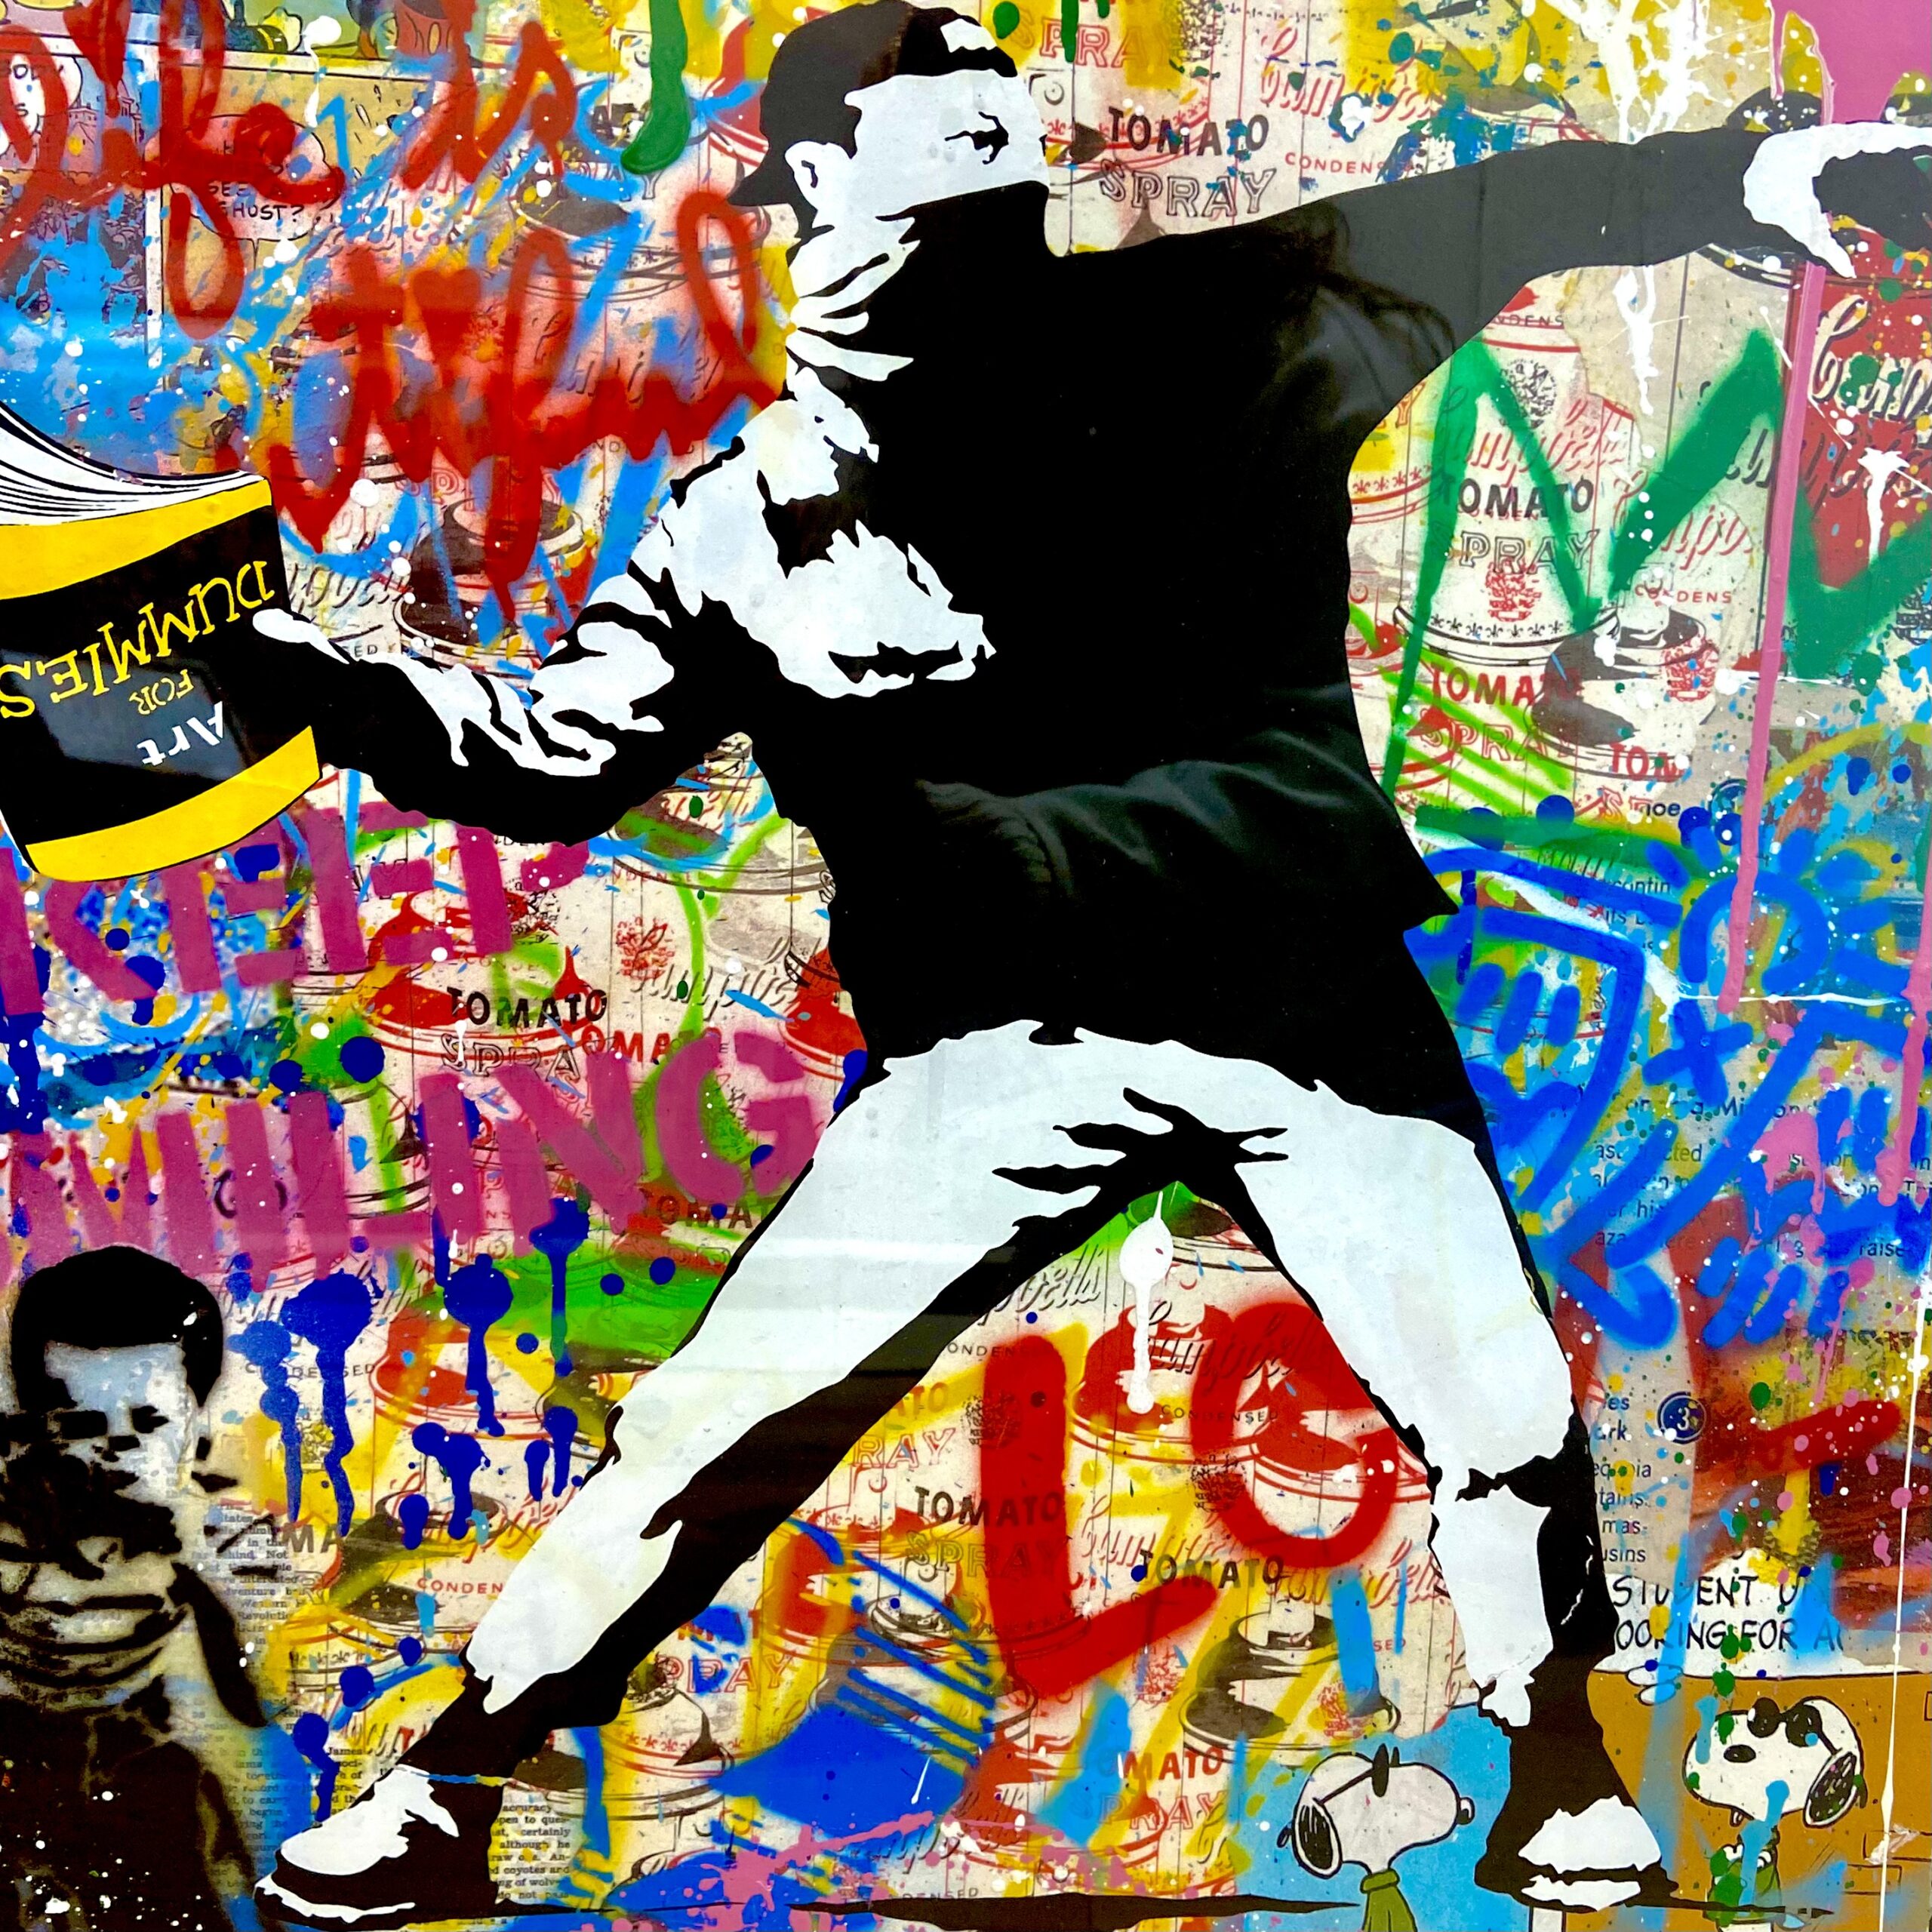 Peinture Banksy thrower de l'artiste Mr Brainwash